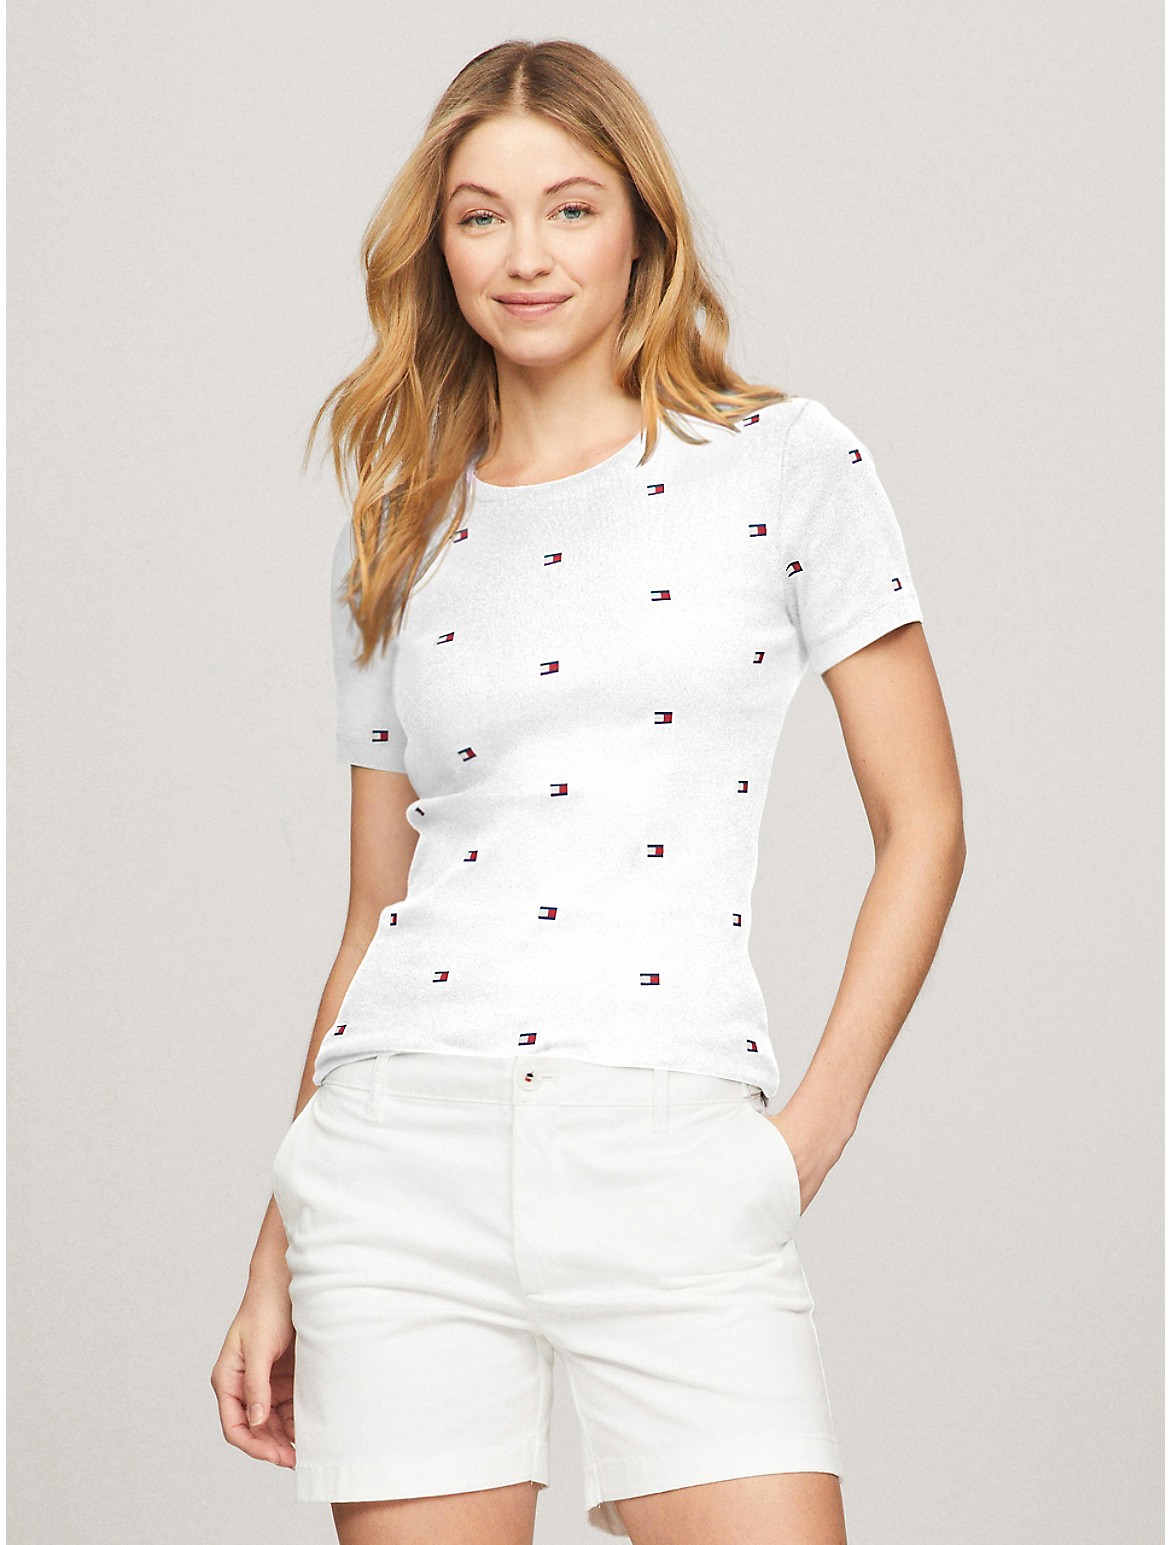 Tommy Hilfiger Women's Favorite Allover Flag Logo T-Shirt - White - XXS